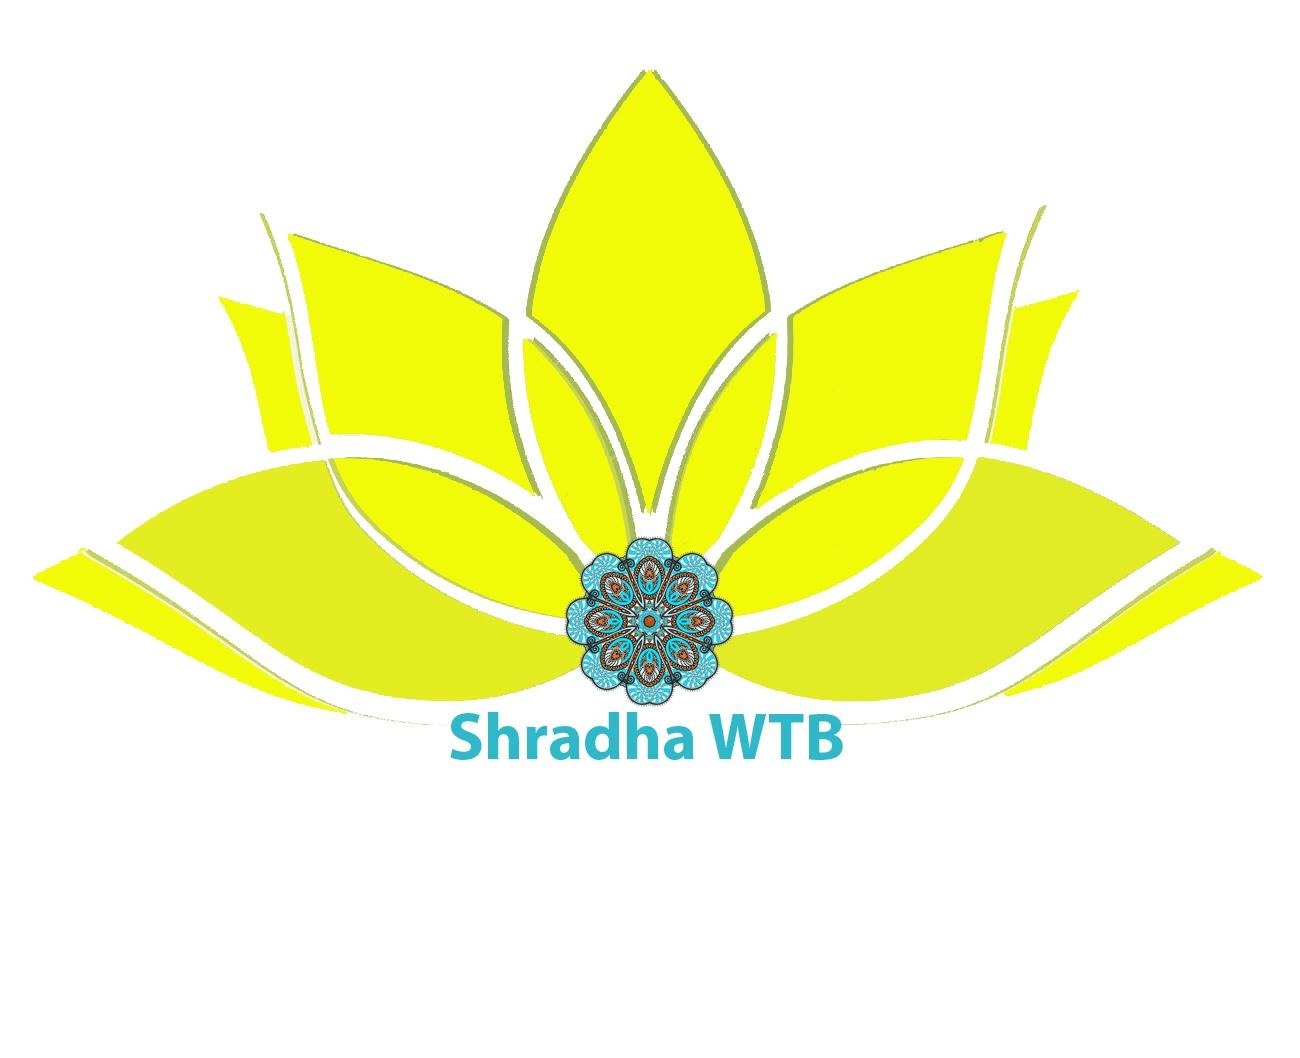 WTB Logo - My New Lovely Logo! Shradha WTB Logo